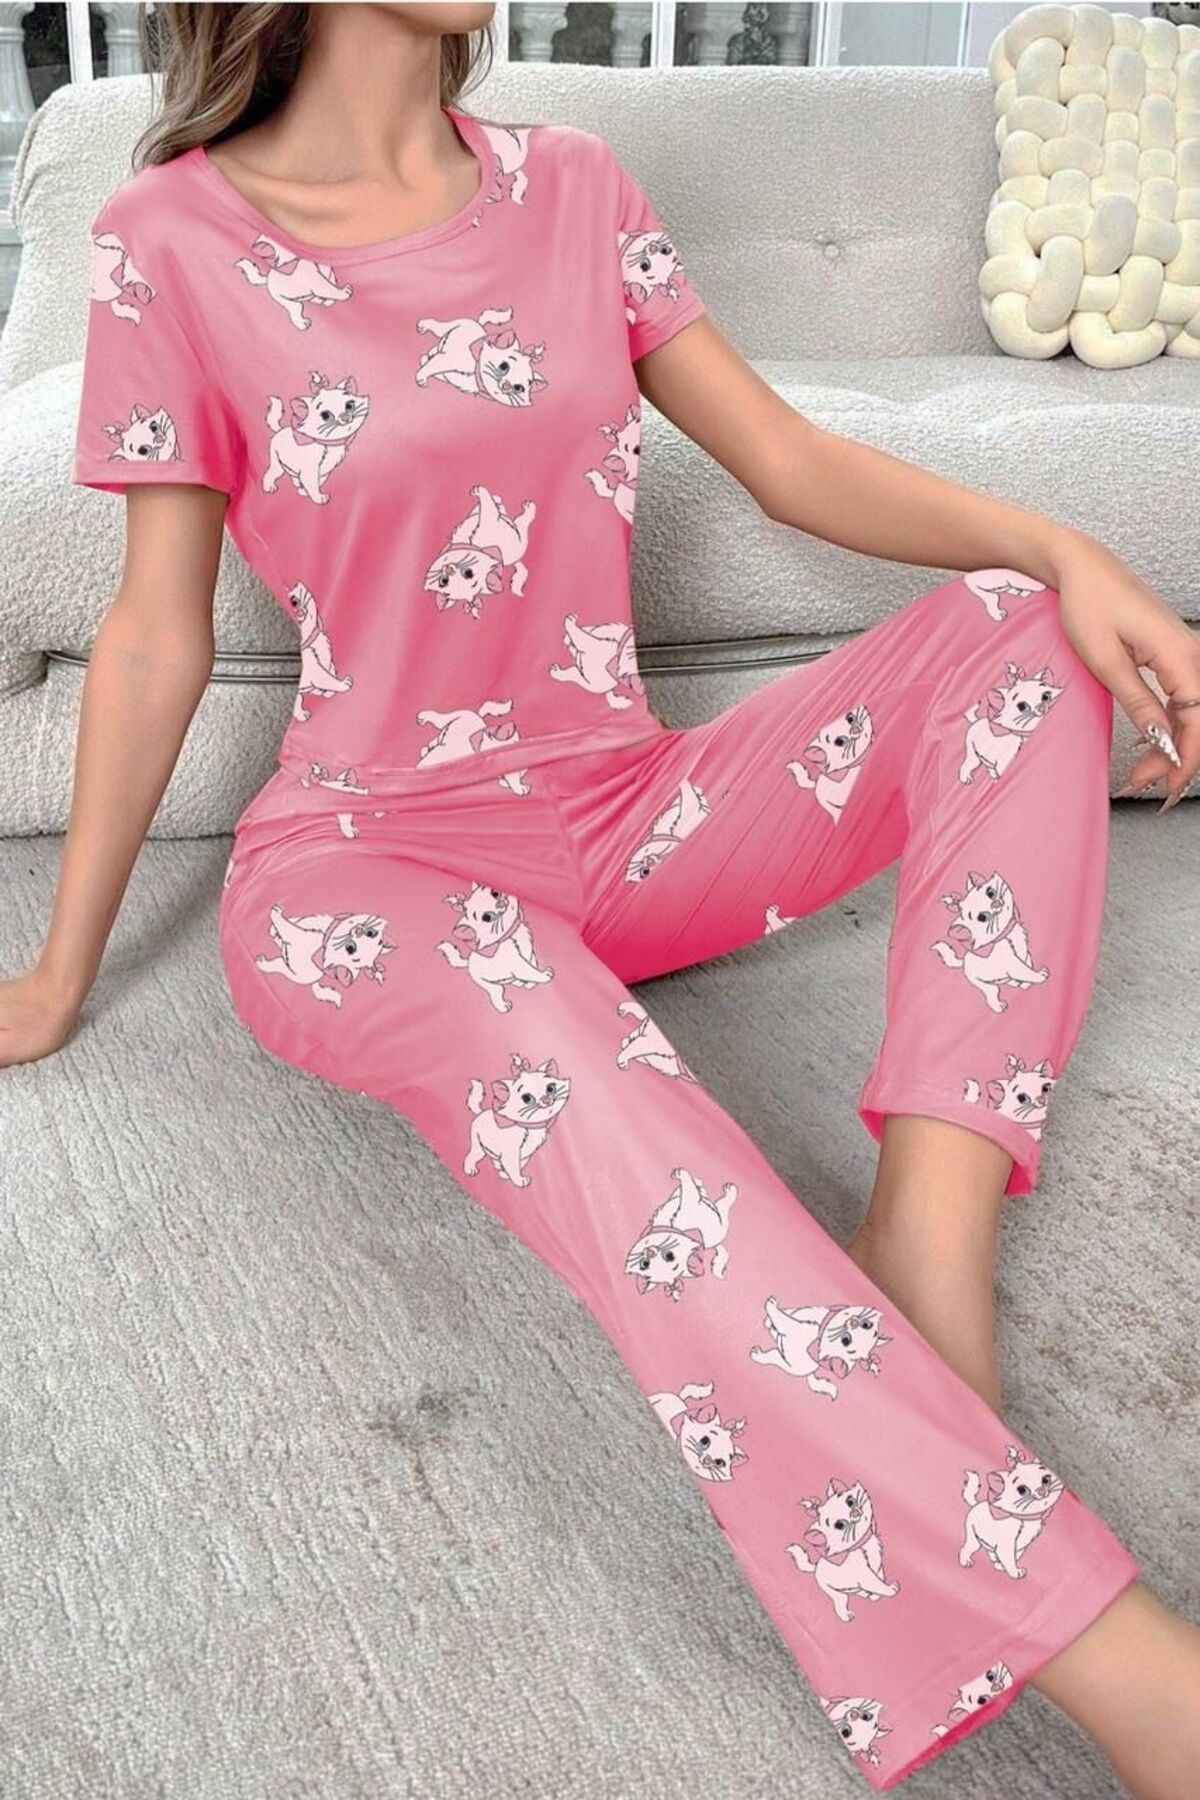 Cesur Kadın Kısa Kol Pijama Takımı PinkCatBig